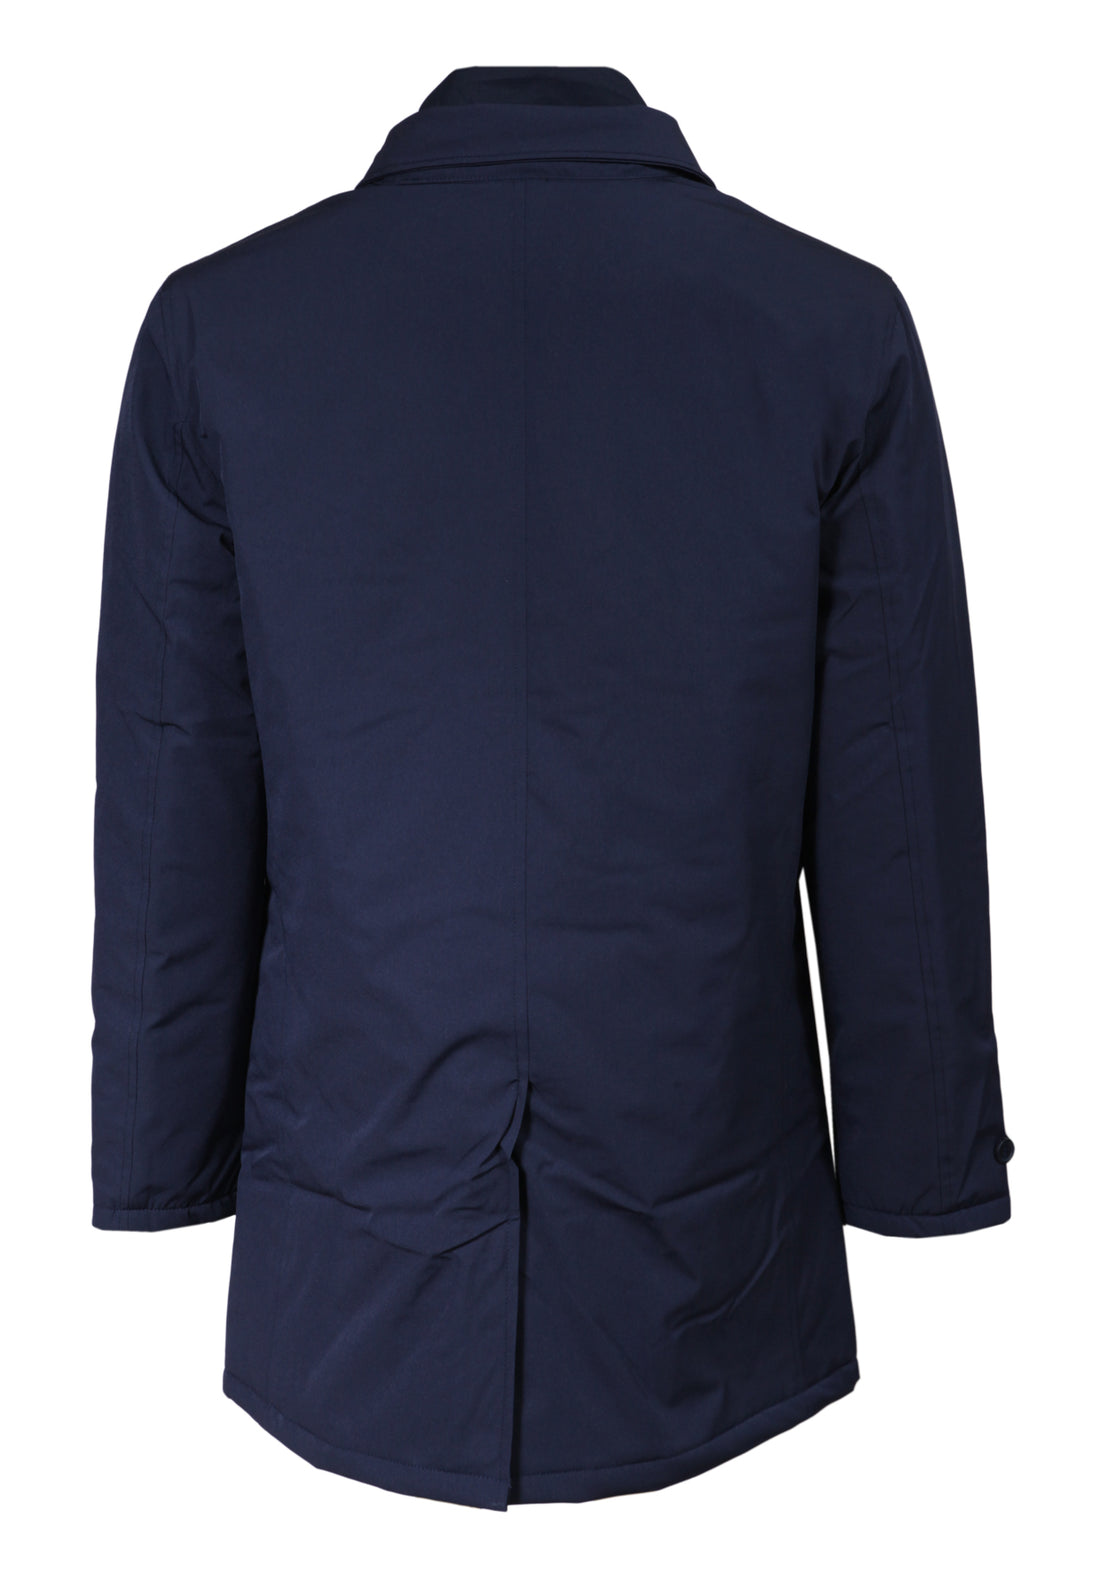 Trench Coat Collar Shirt Removable internal bib - Blue